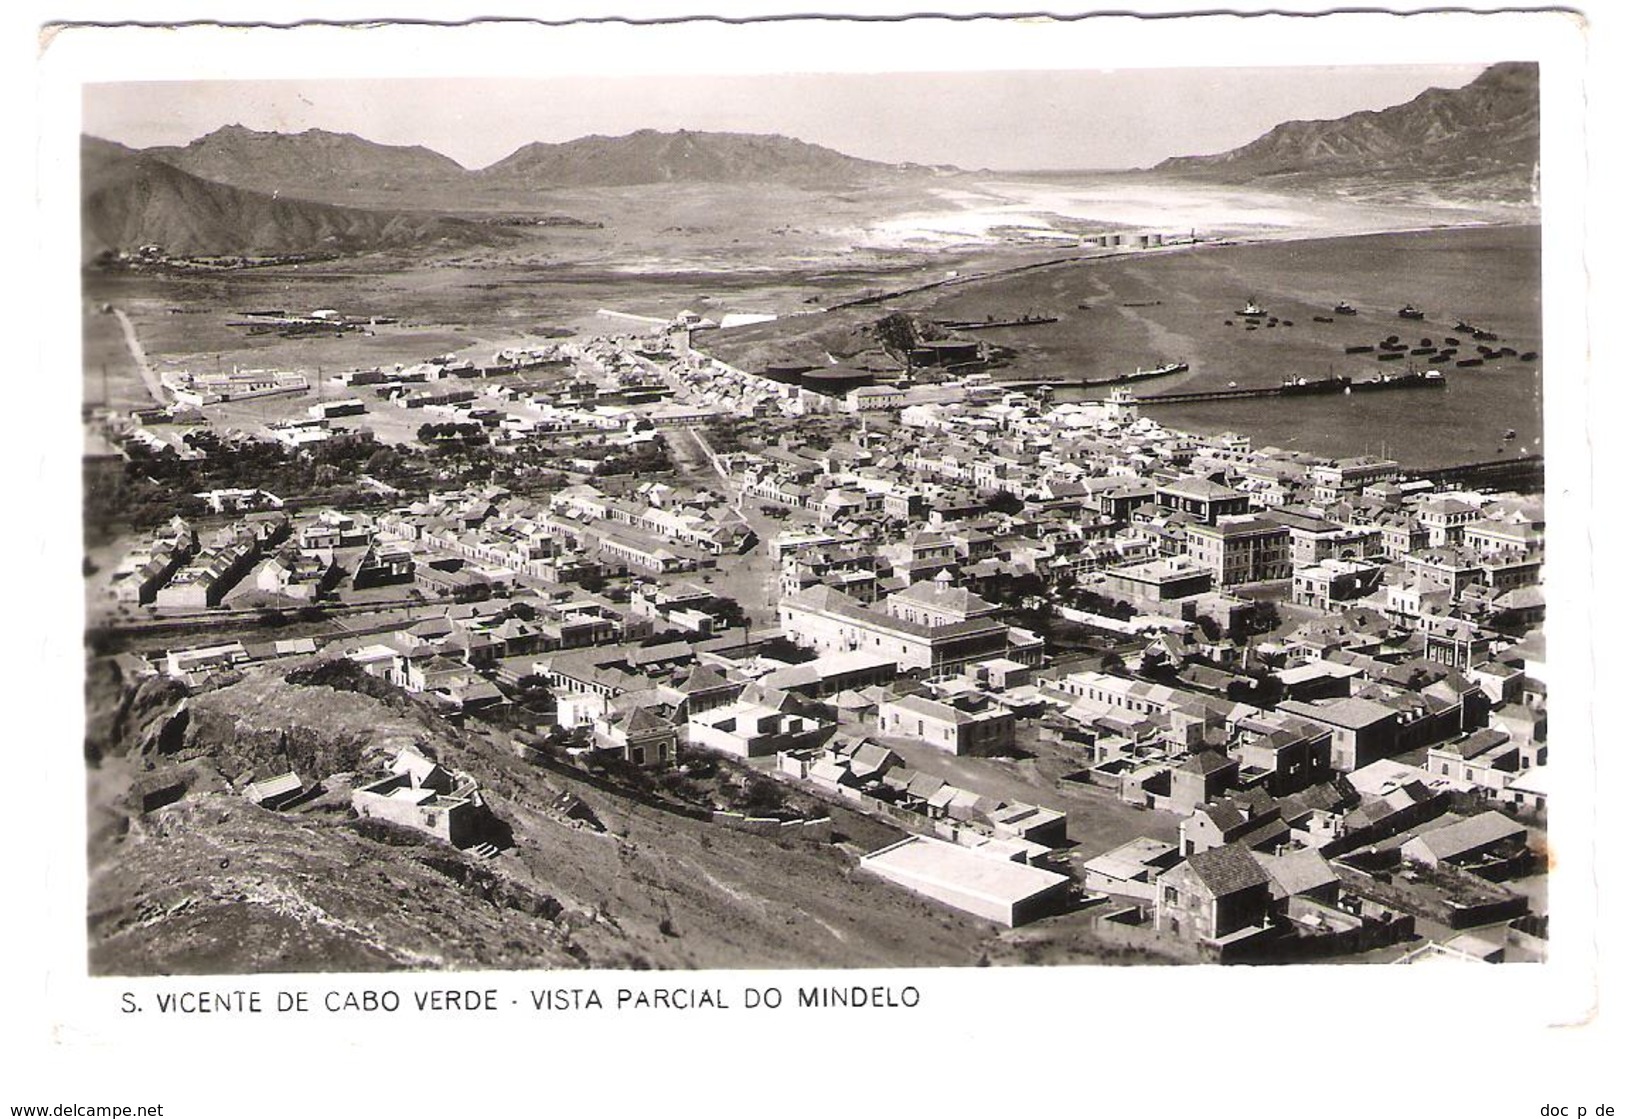 Cap Verde - S. Vincente De Cabo Verde - Vista Parcial Do Mindelo - Old View - Posted With Stamp - Cap Verde